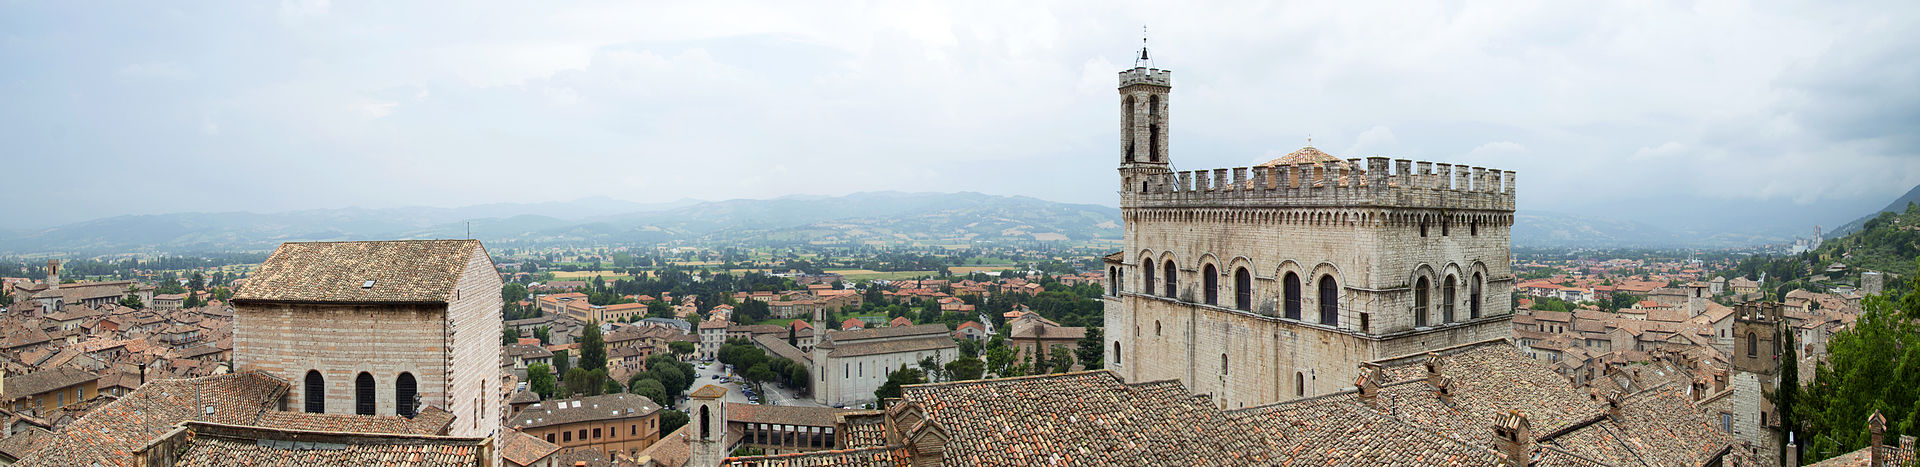 Panorama_of_Gubbio